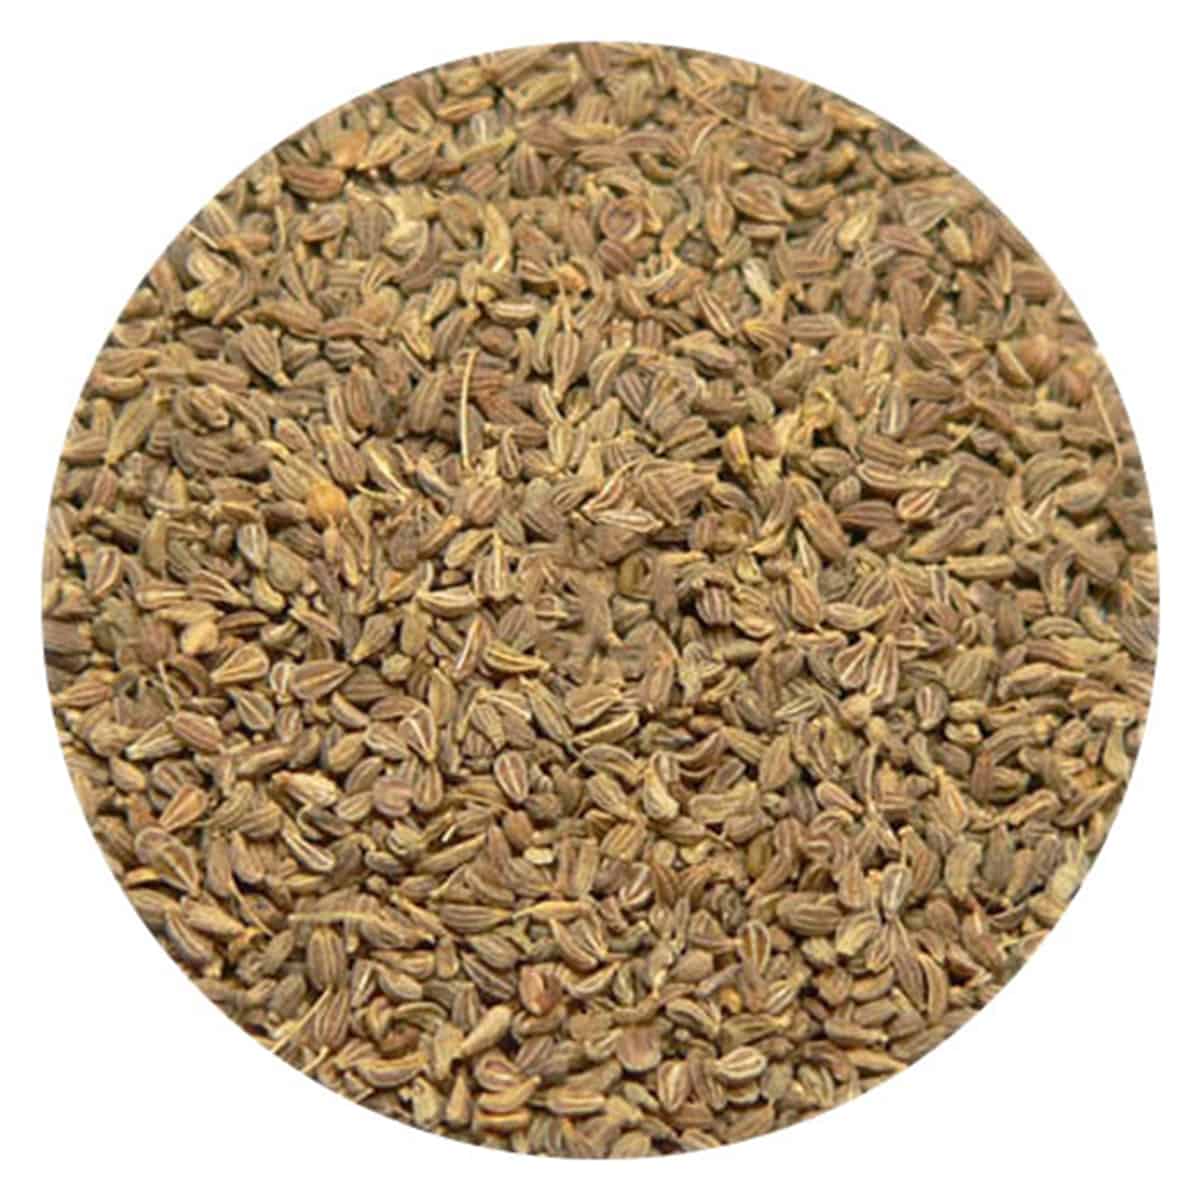 Buy IAG Foods Aniseed Seeds - 1 kg